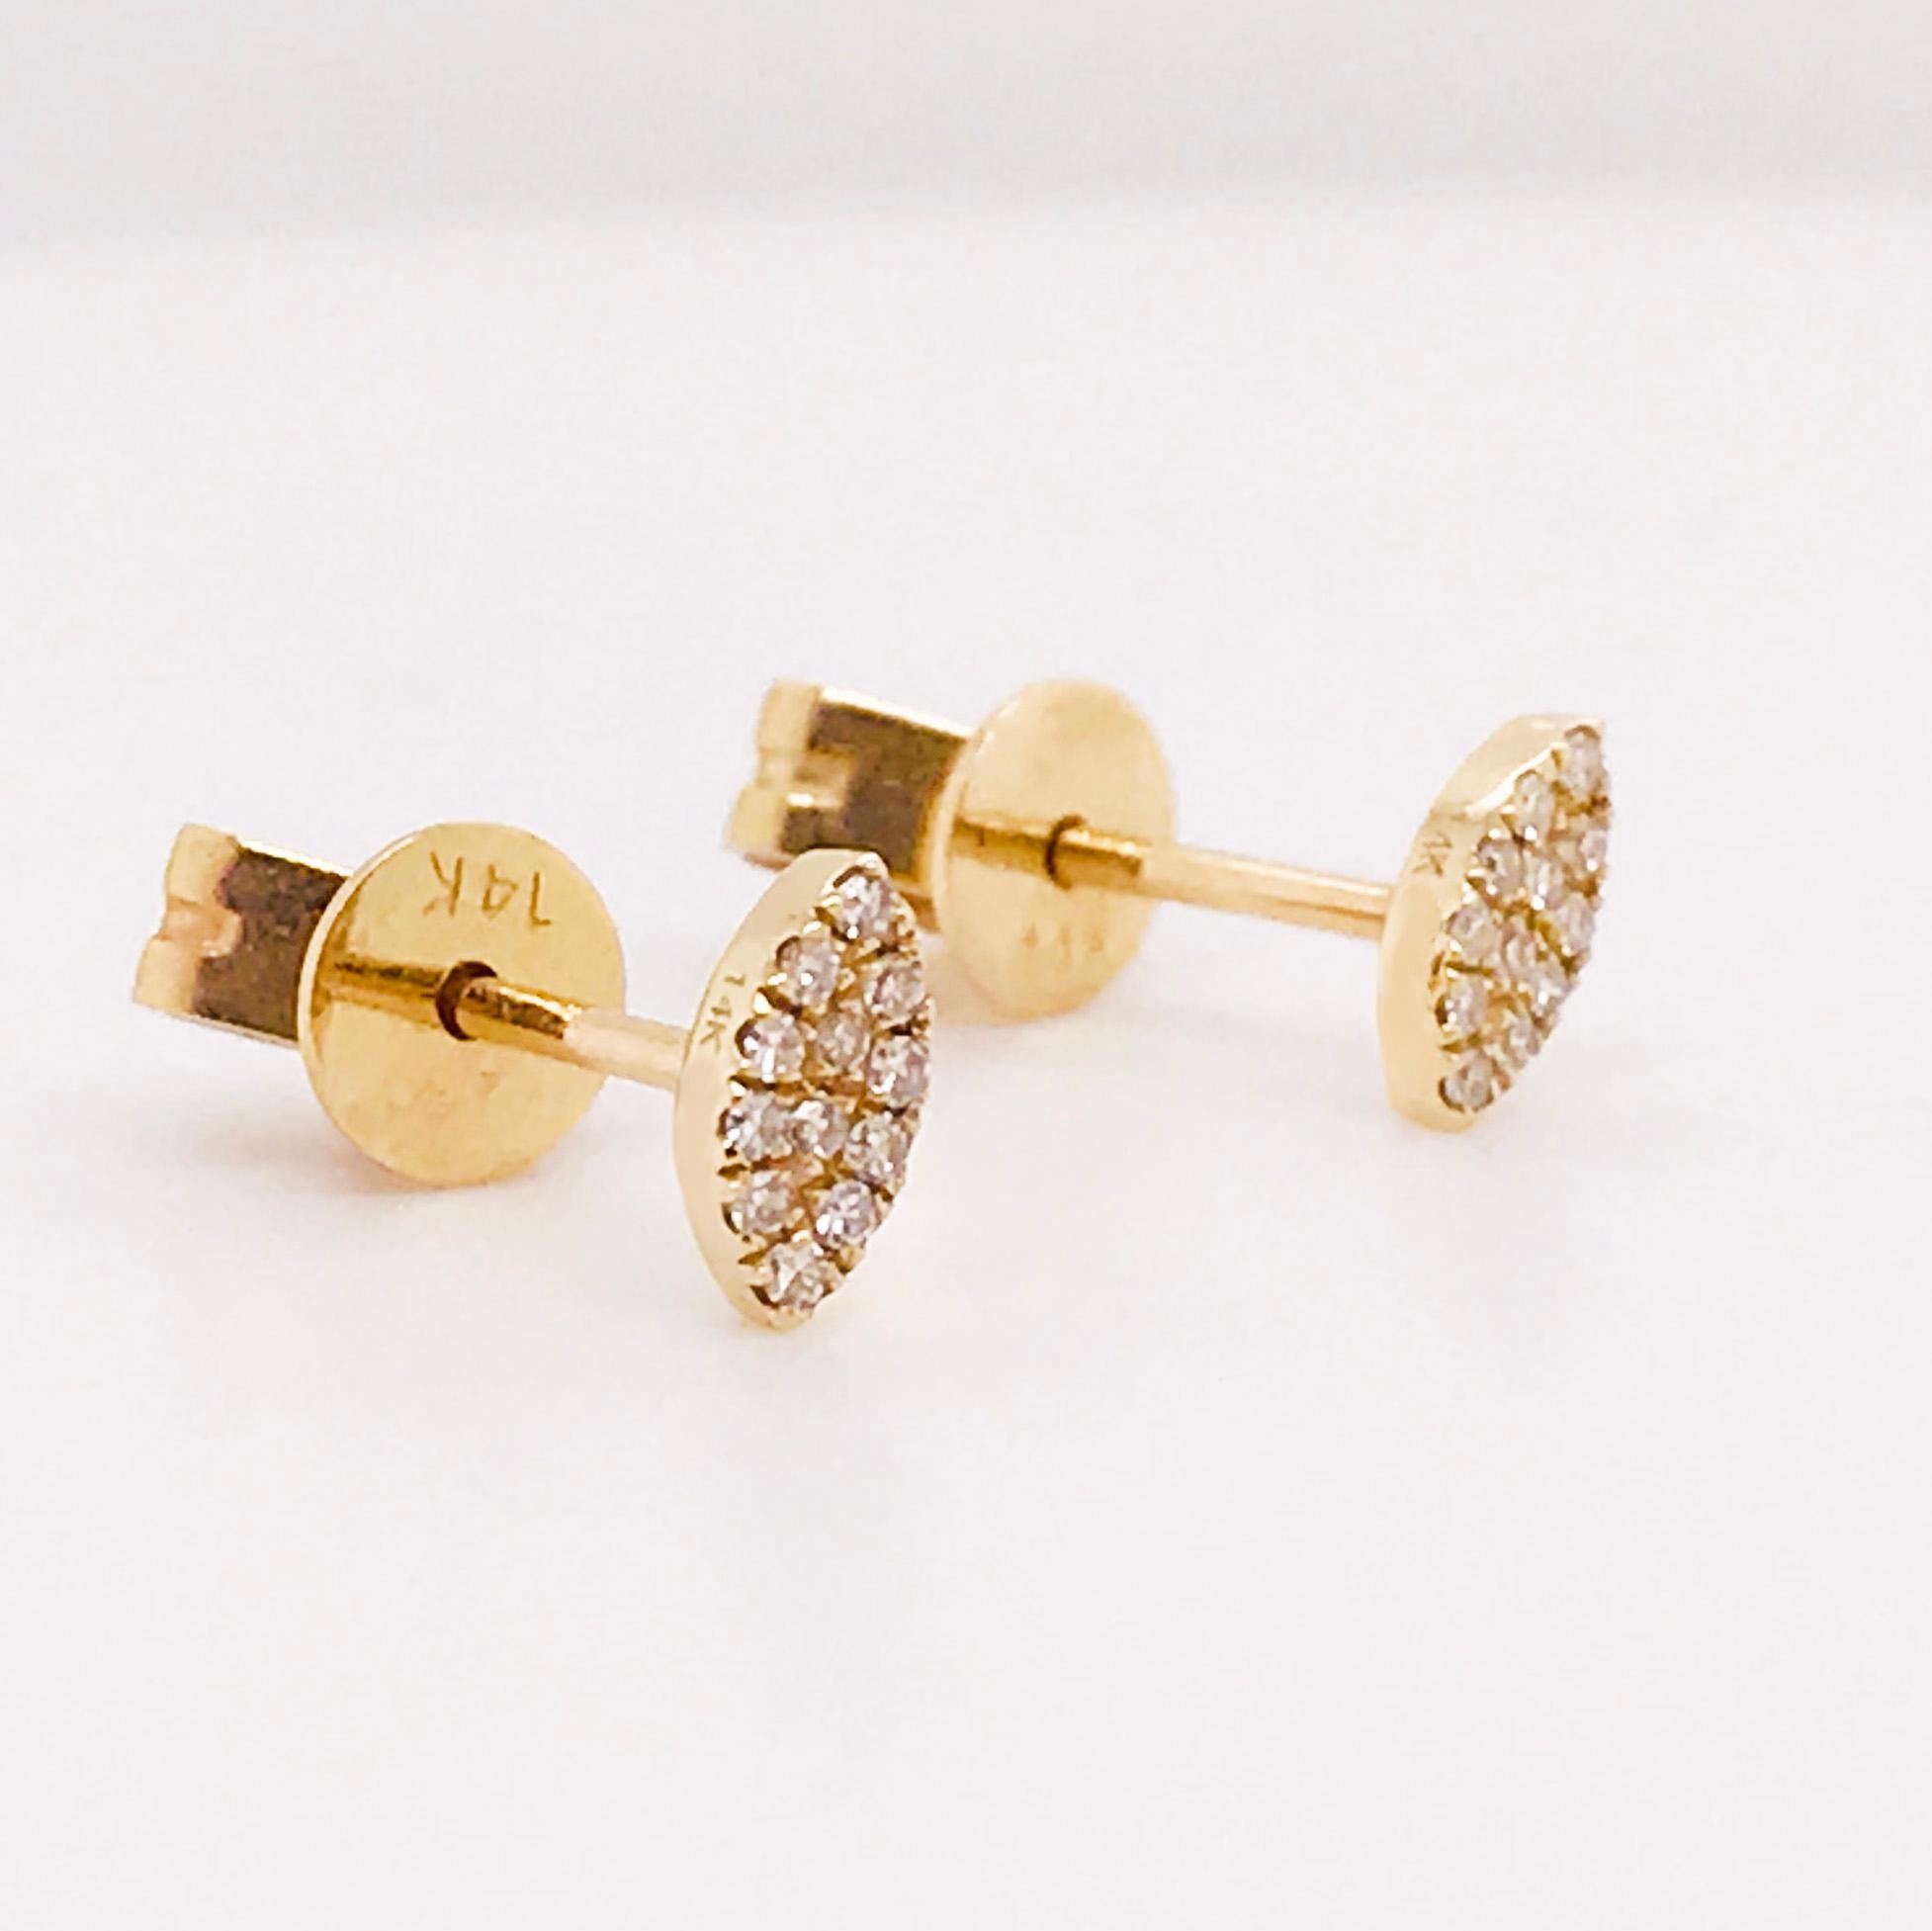 Round Cut 0.06 Carat Diamond Marquise Shaped Earring Studs in 14 Karat Yellow Gold